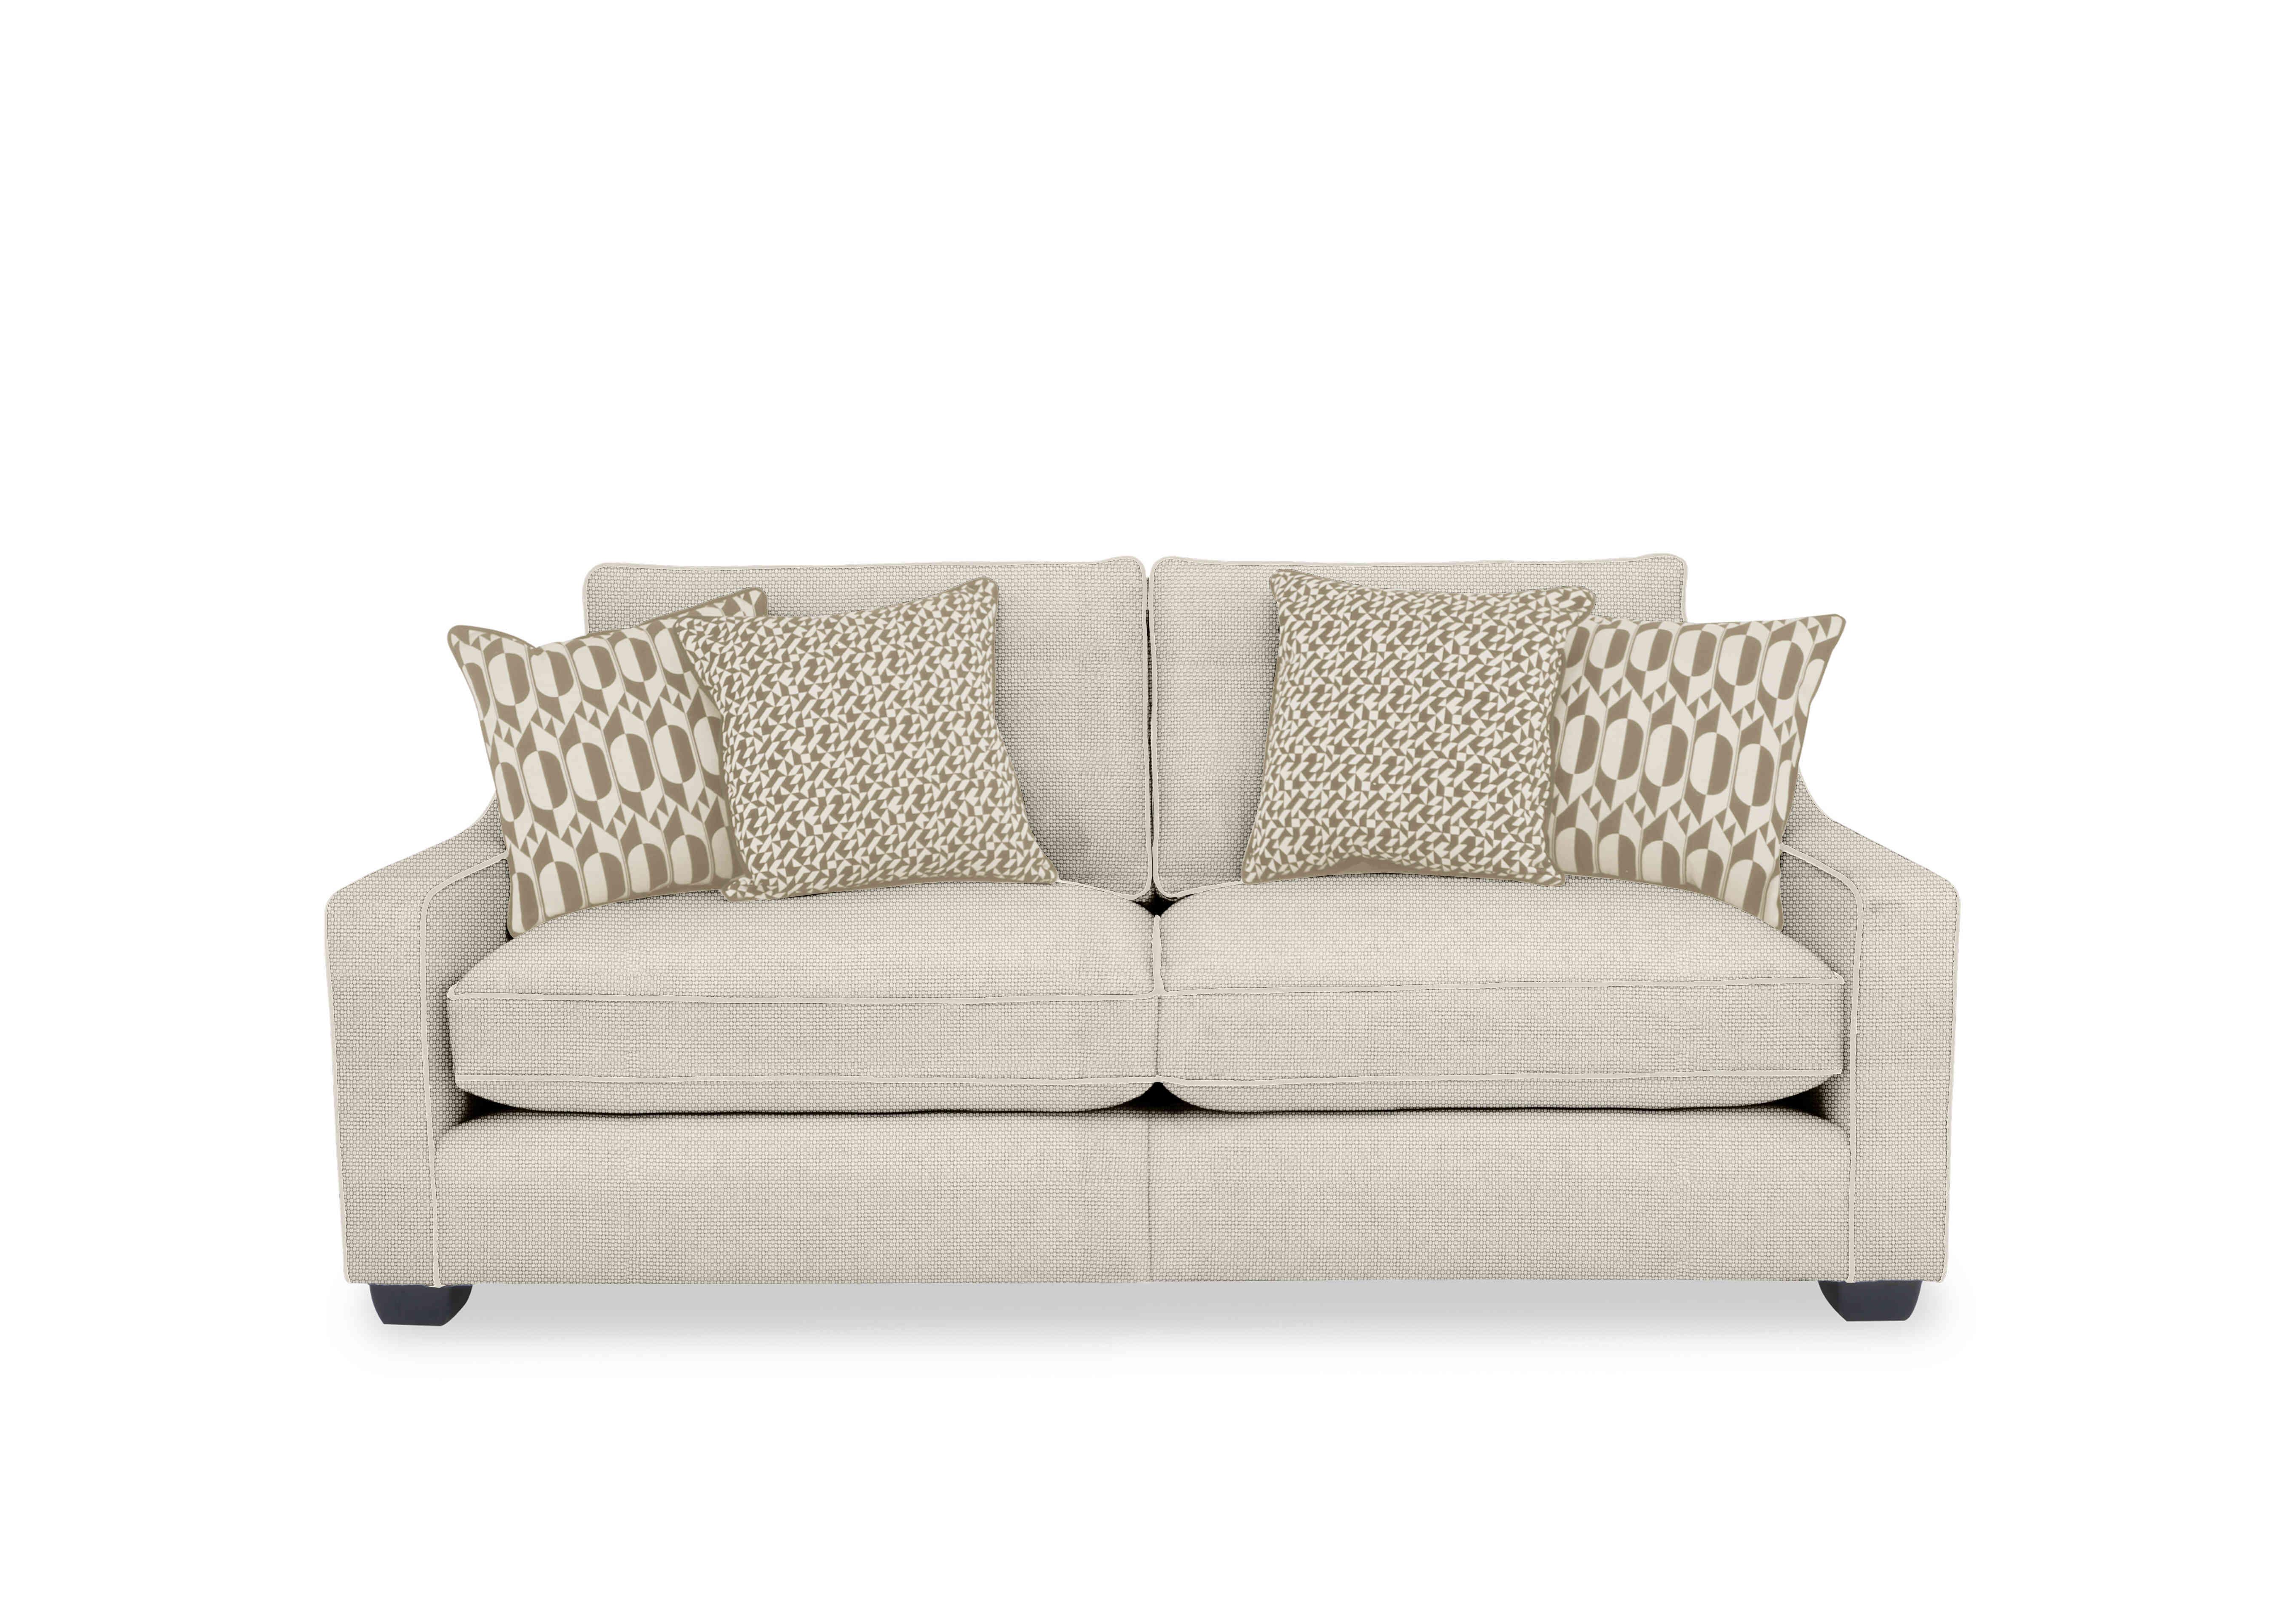 Celine 3 Seater Sofa in Dice Natural Eb Sp on Furniture Village